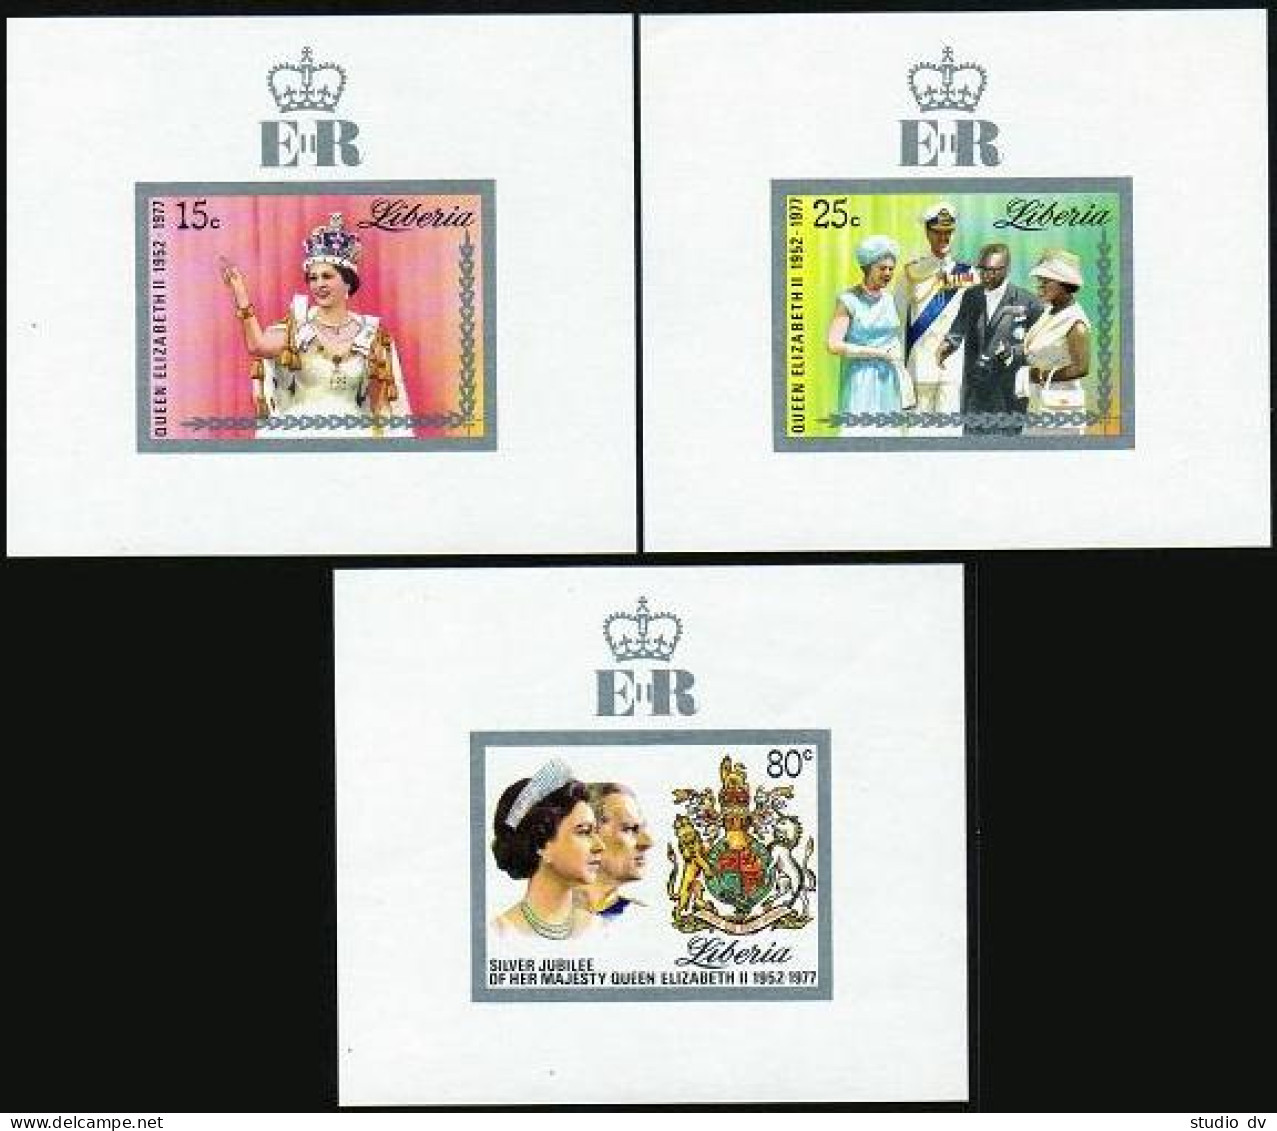 Liberia 788-790 Deluxe,MNH.Michel 1038B-1040B. Reign Of Queen Elizabeth II,1977. - Liberia